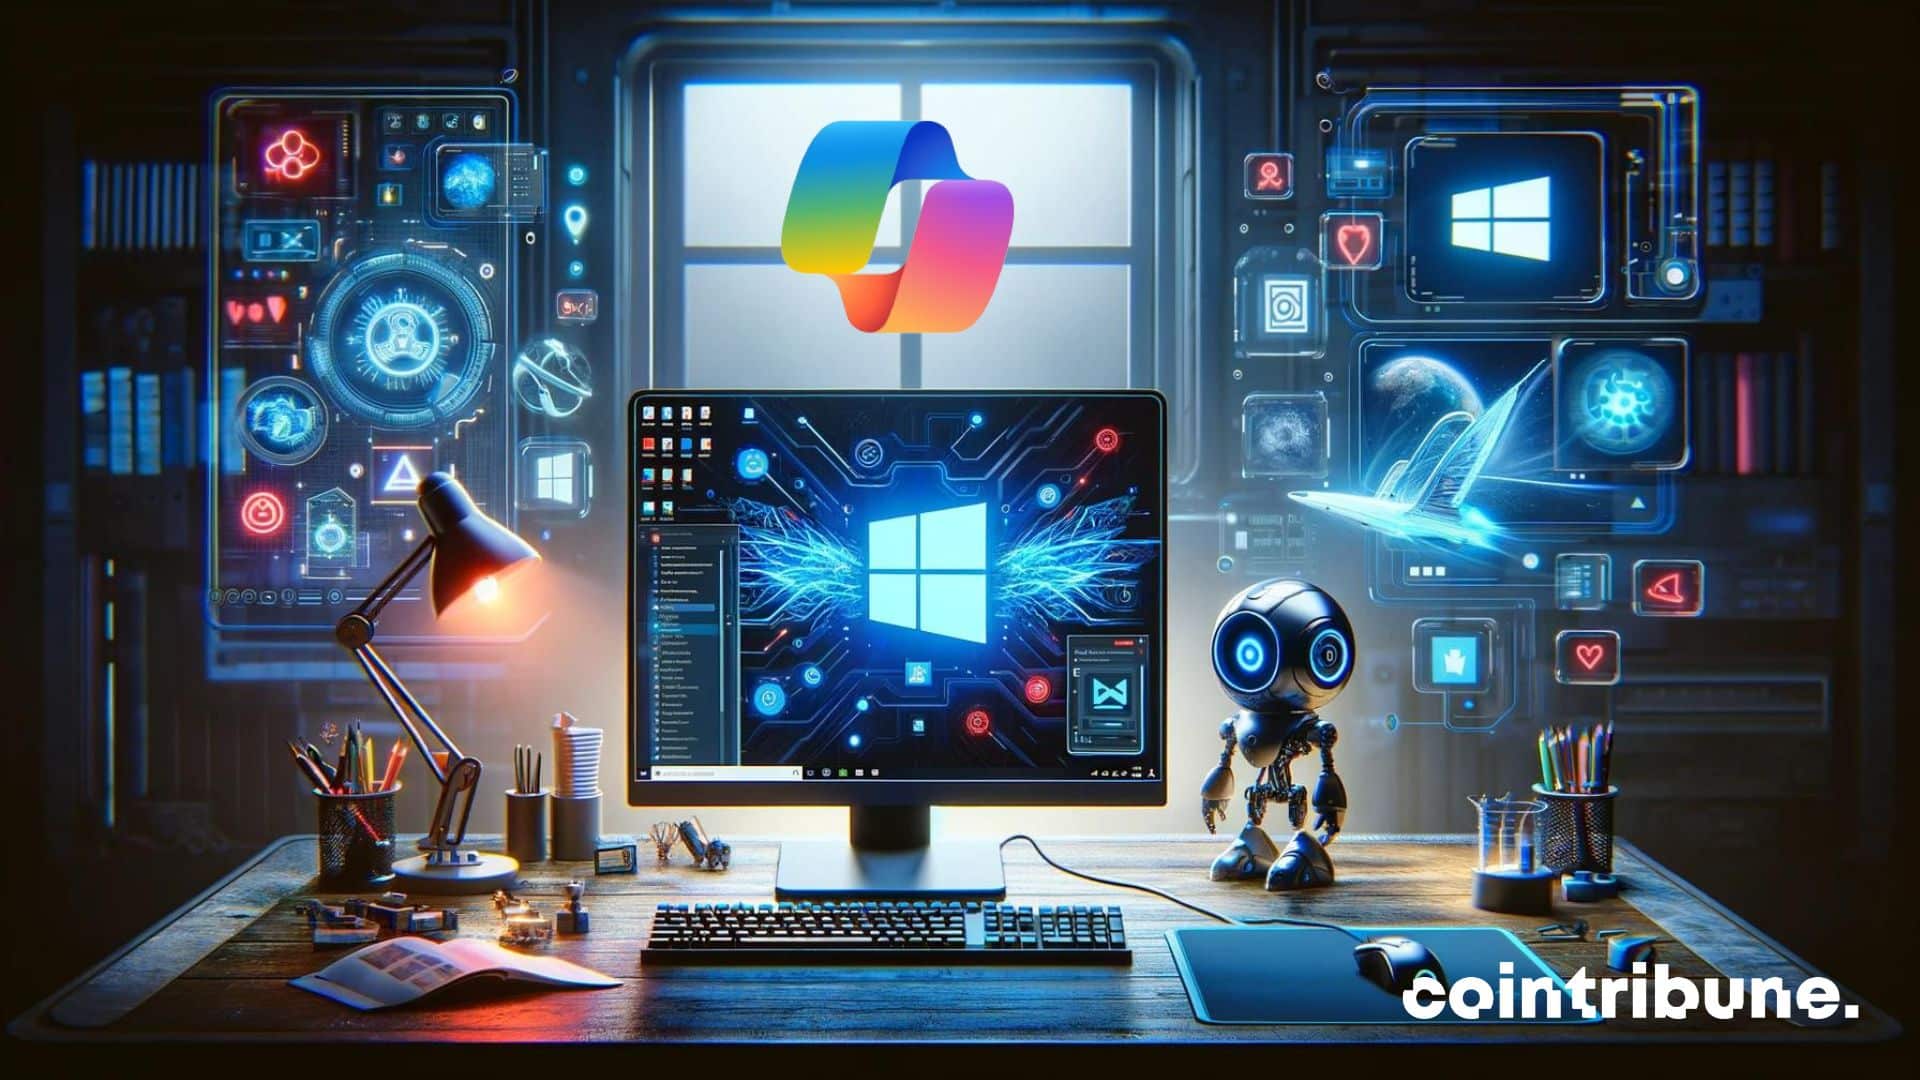 Microsoft is creating a 'Copilot' key to integrate AI into Windows 11 PCs